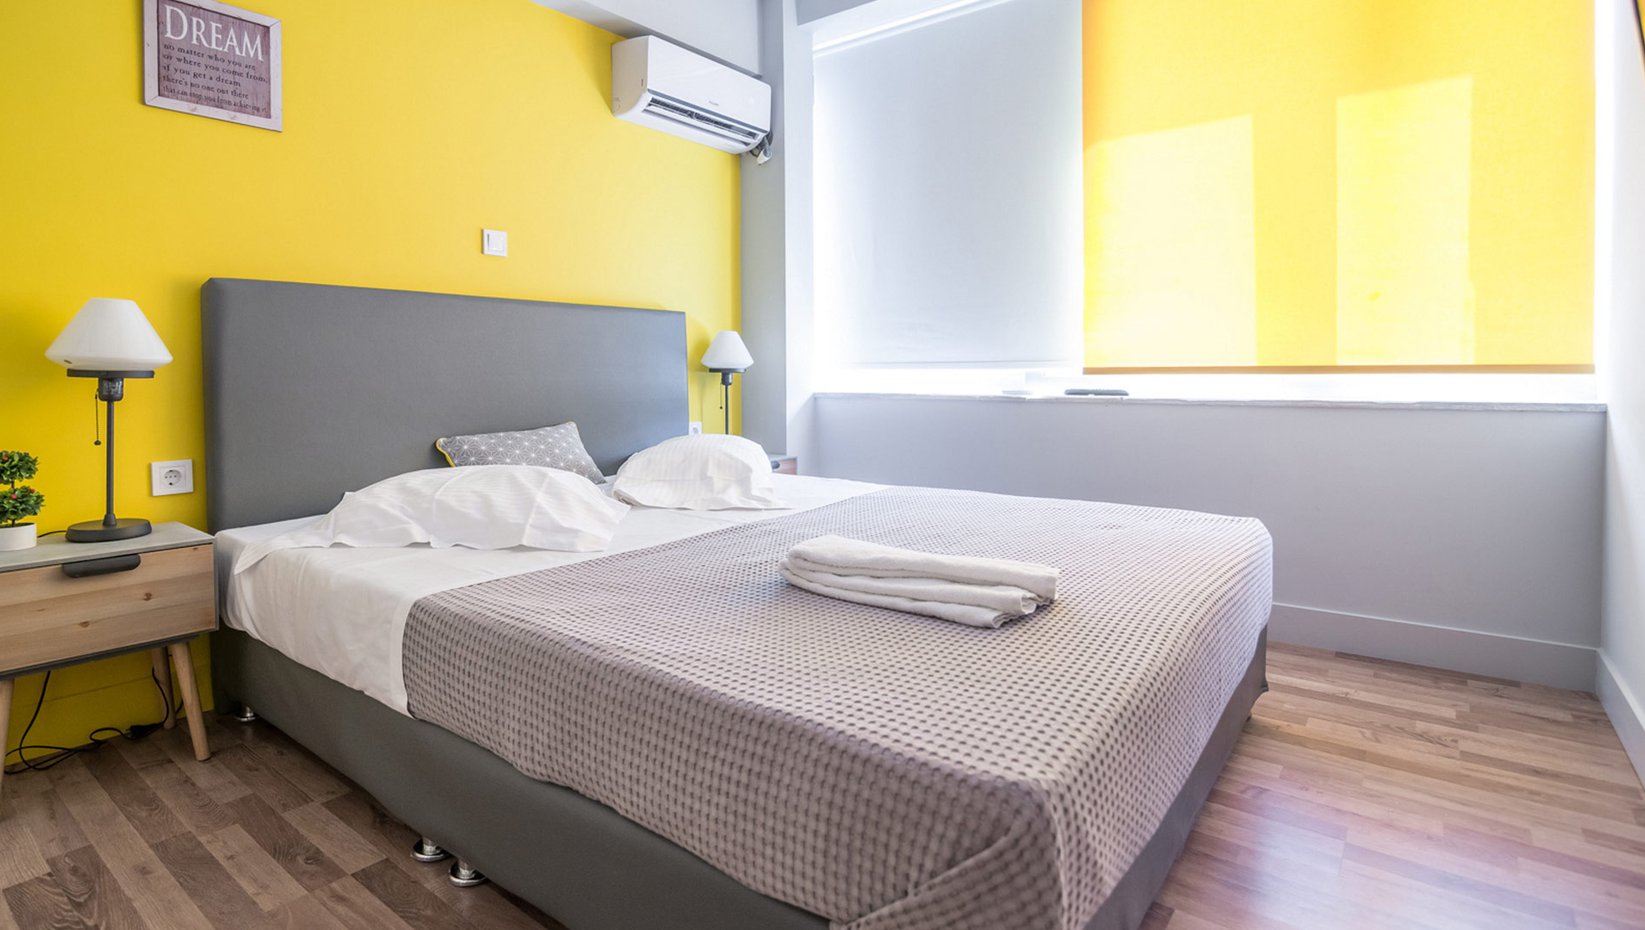 Enattica Syntagma Living, δωμάτιο με διπλό κρεβάτι